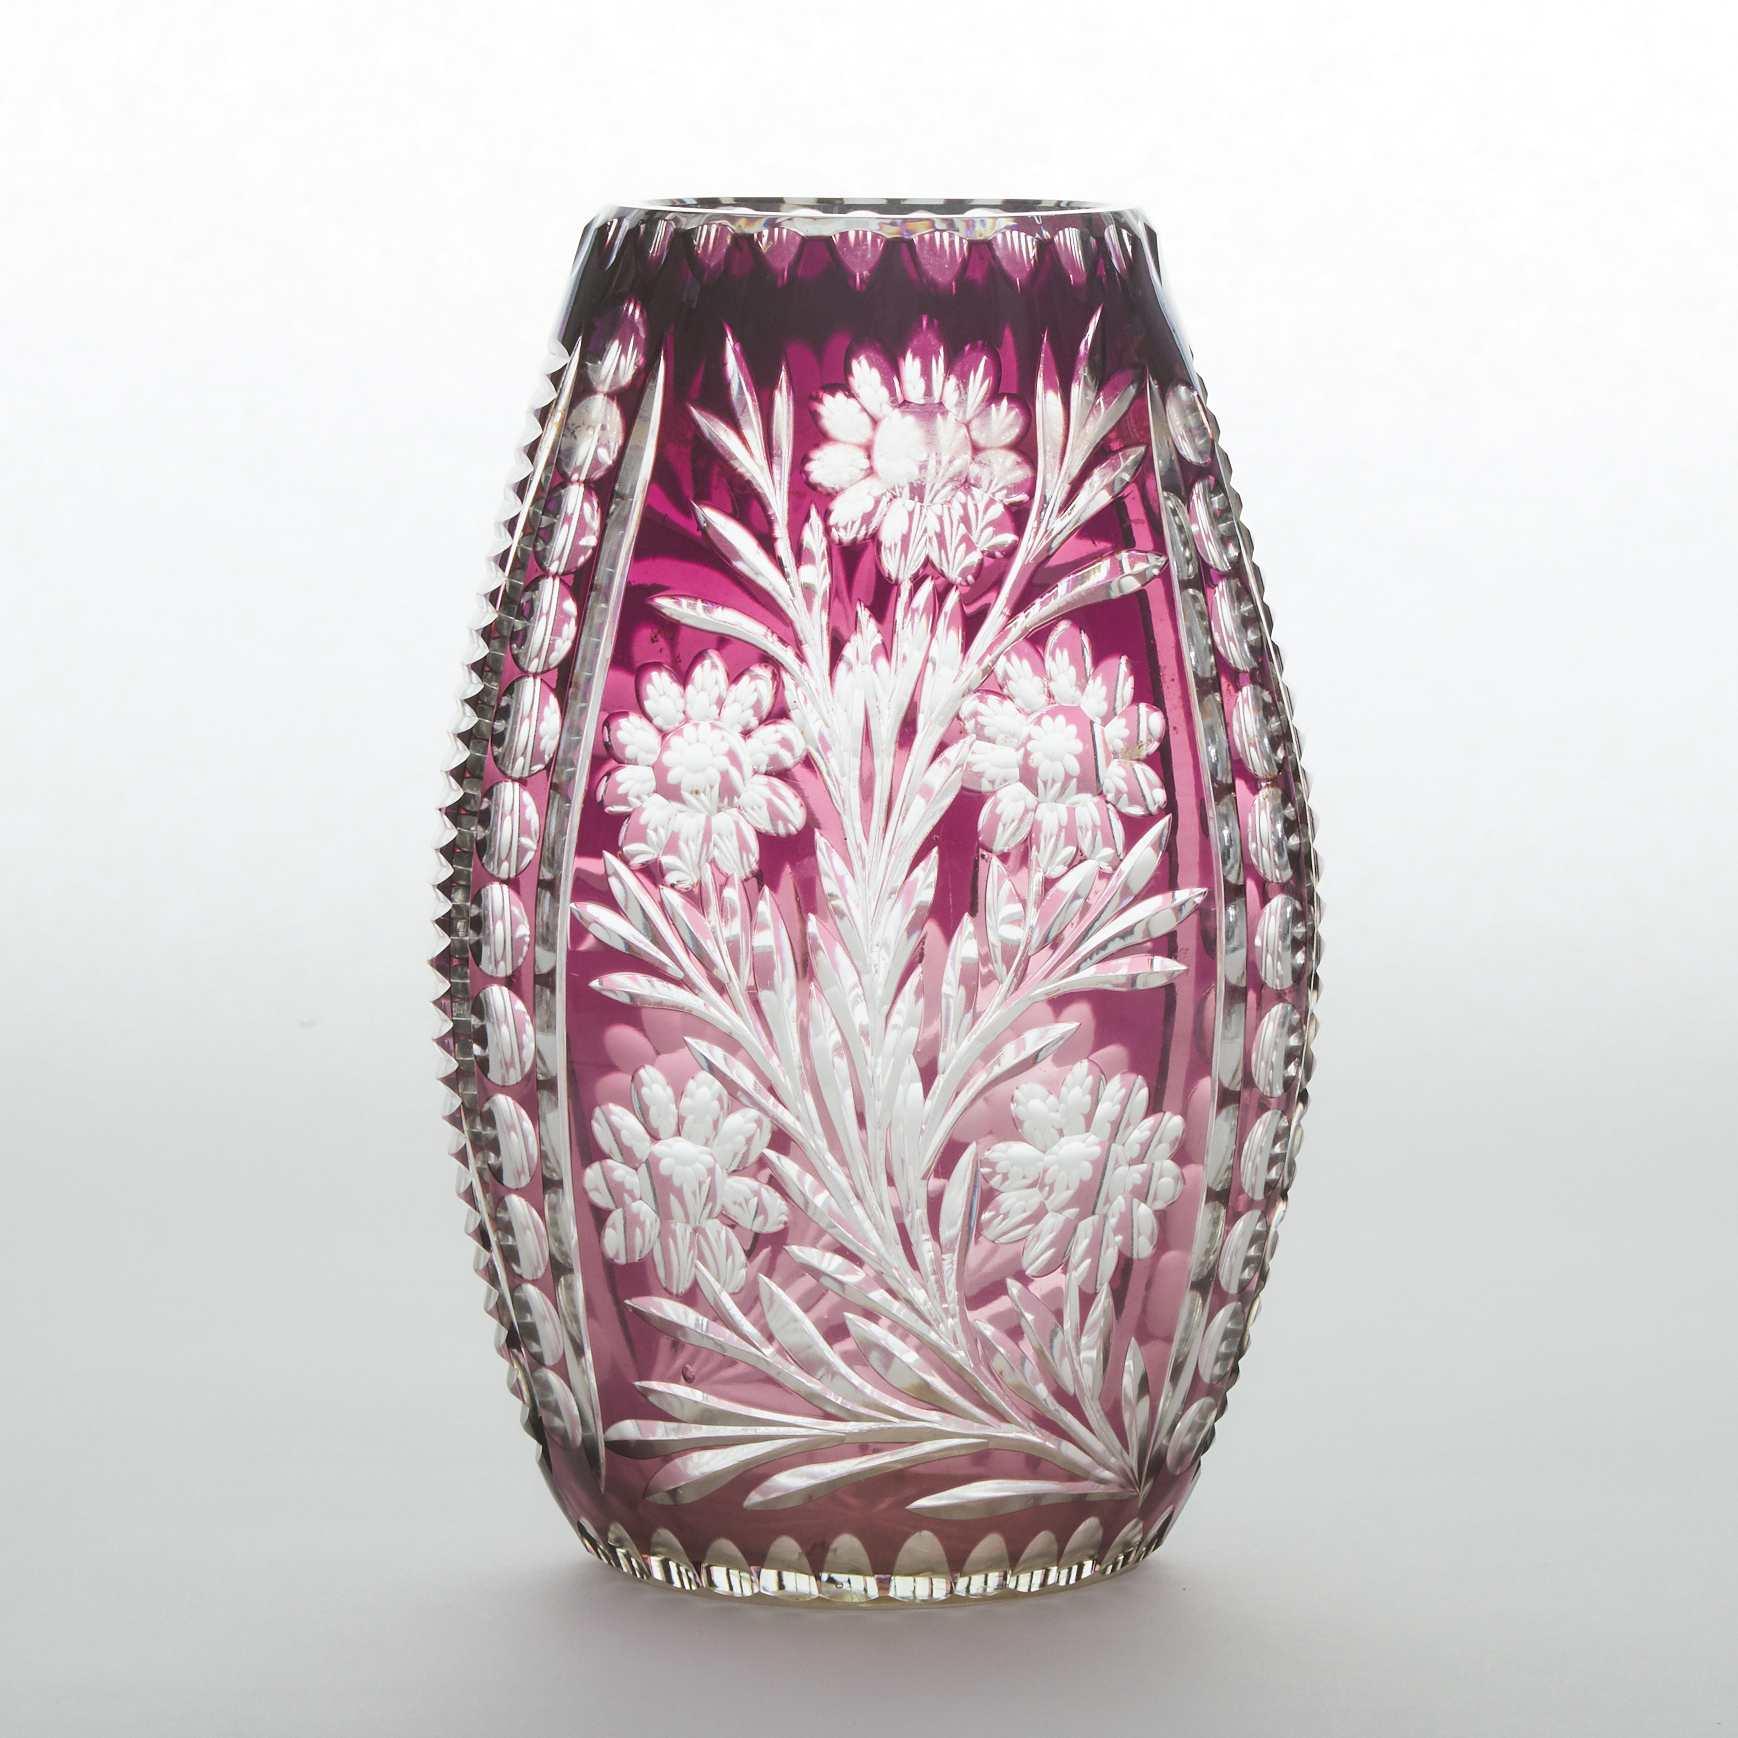 Bohemian Amethyst Overlaid and Cut Glass Vase, 20th century